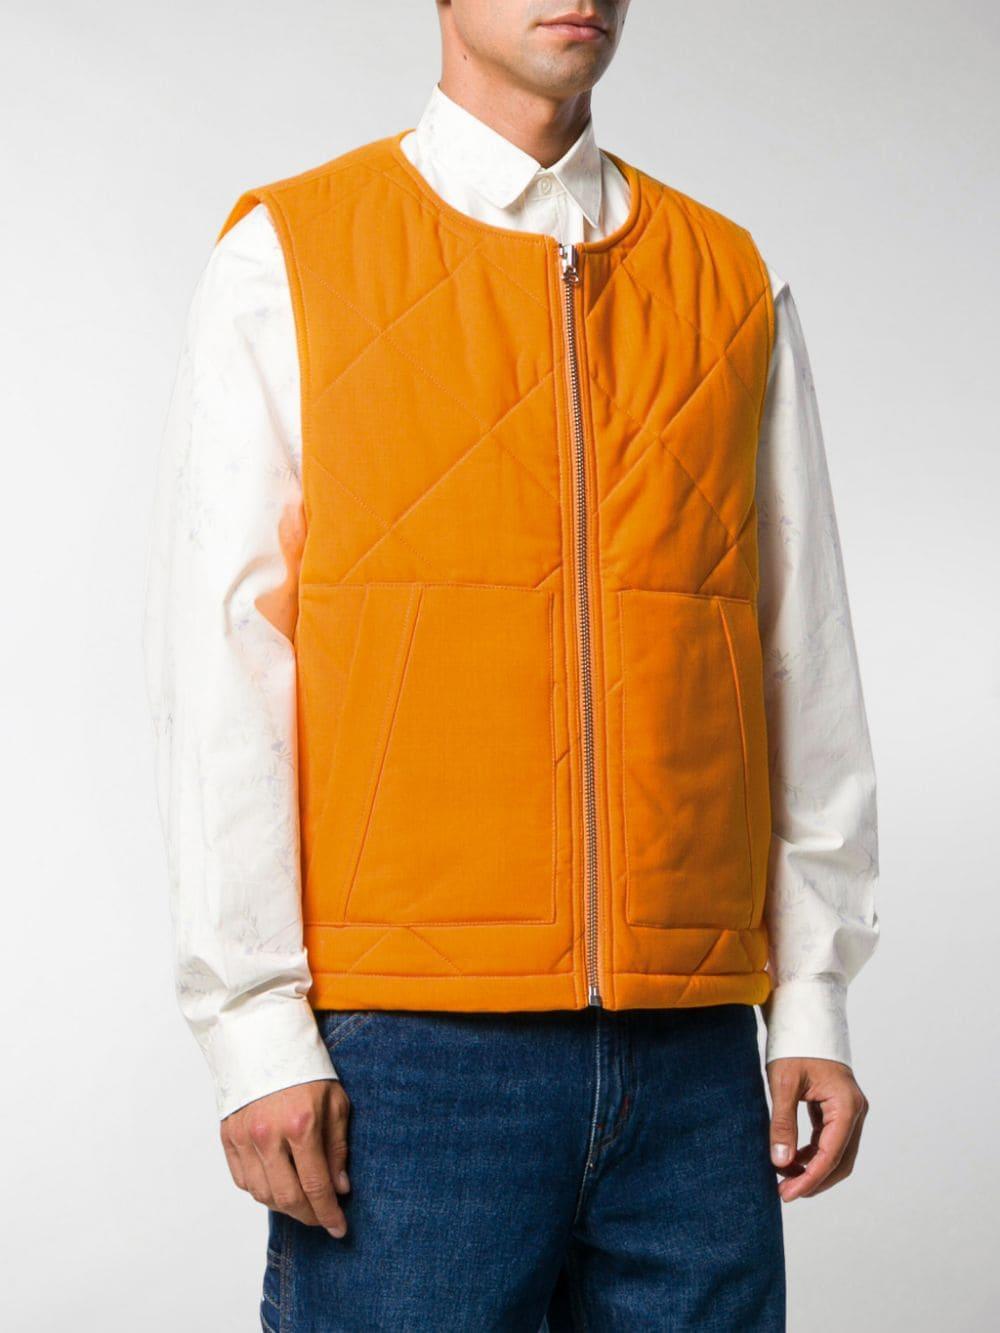 Jacquemus Wool Le Gilet Romarin Jacket in Orange for Men - Save 24% - Lyst